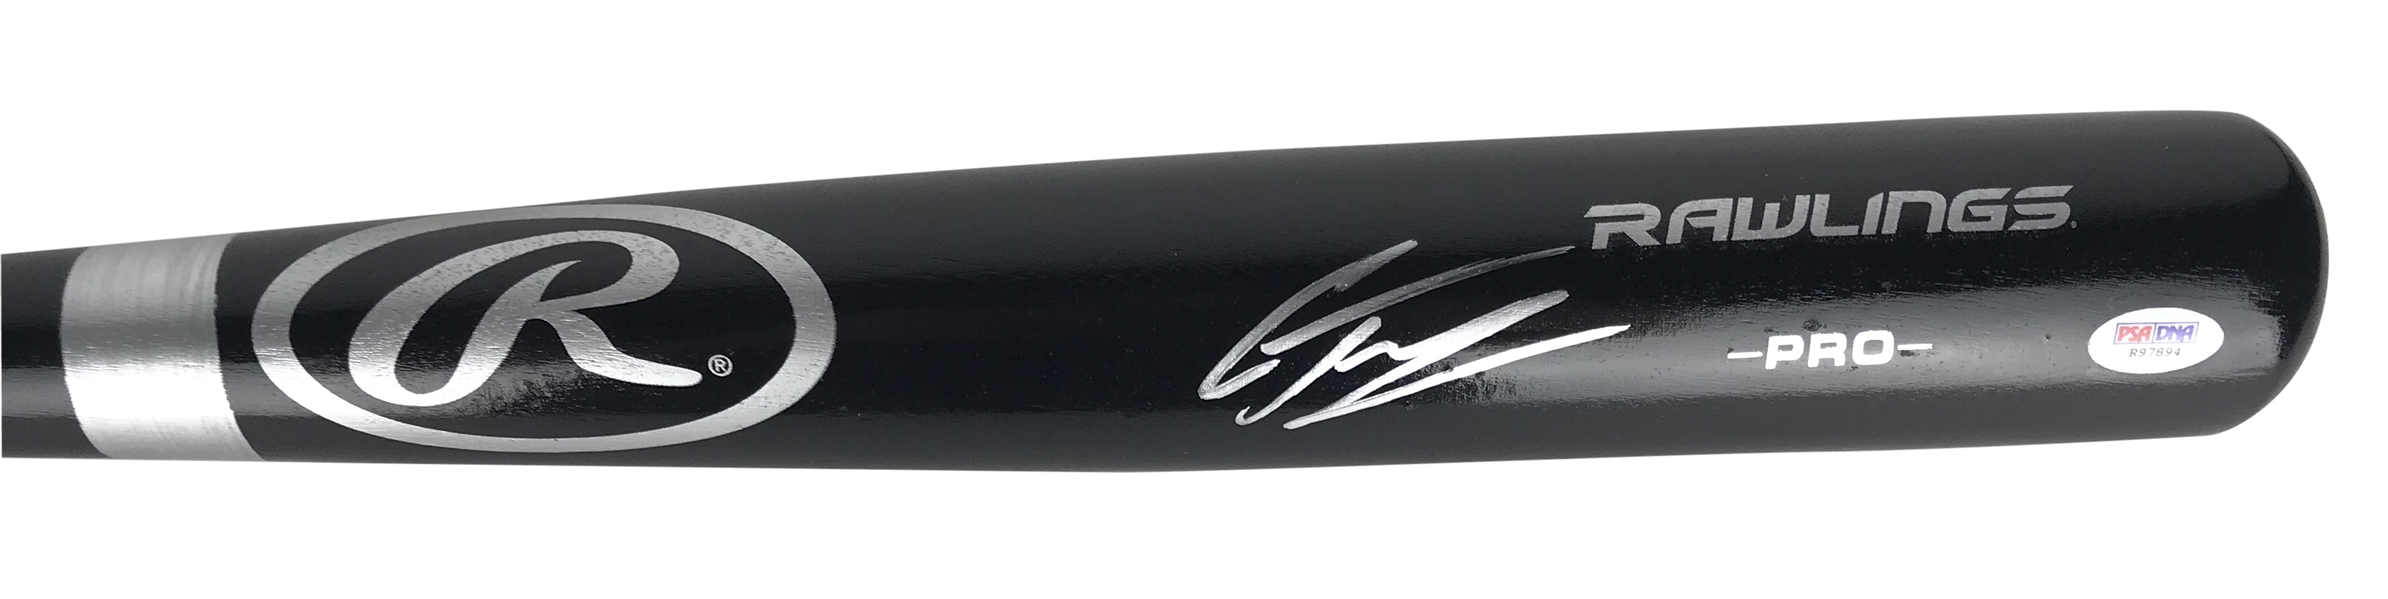 Gleyber Torres Rookie Signed Full Size Baseball Bat (PSA/DNA)